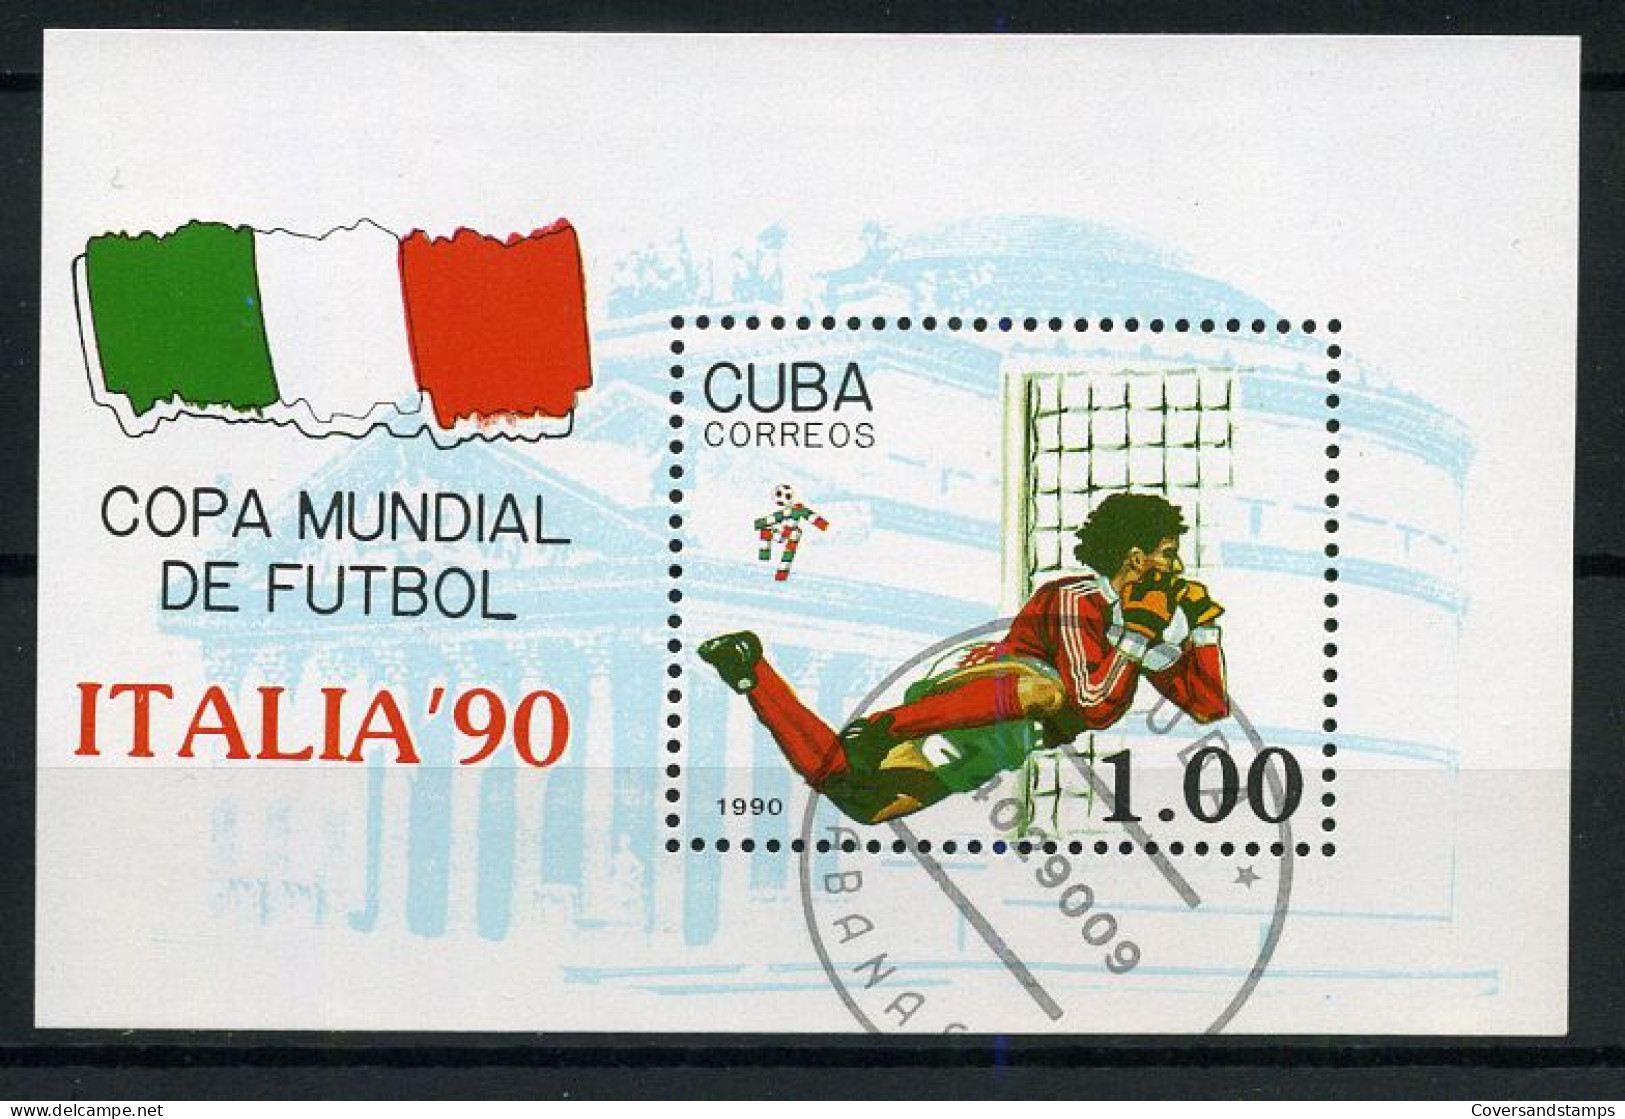 Cuba - Copa Mundial De Futbol, Italia '90 - 1990 – Italy